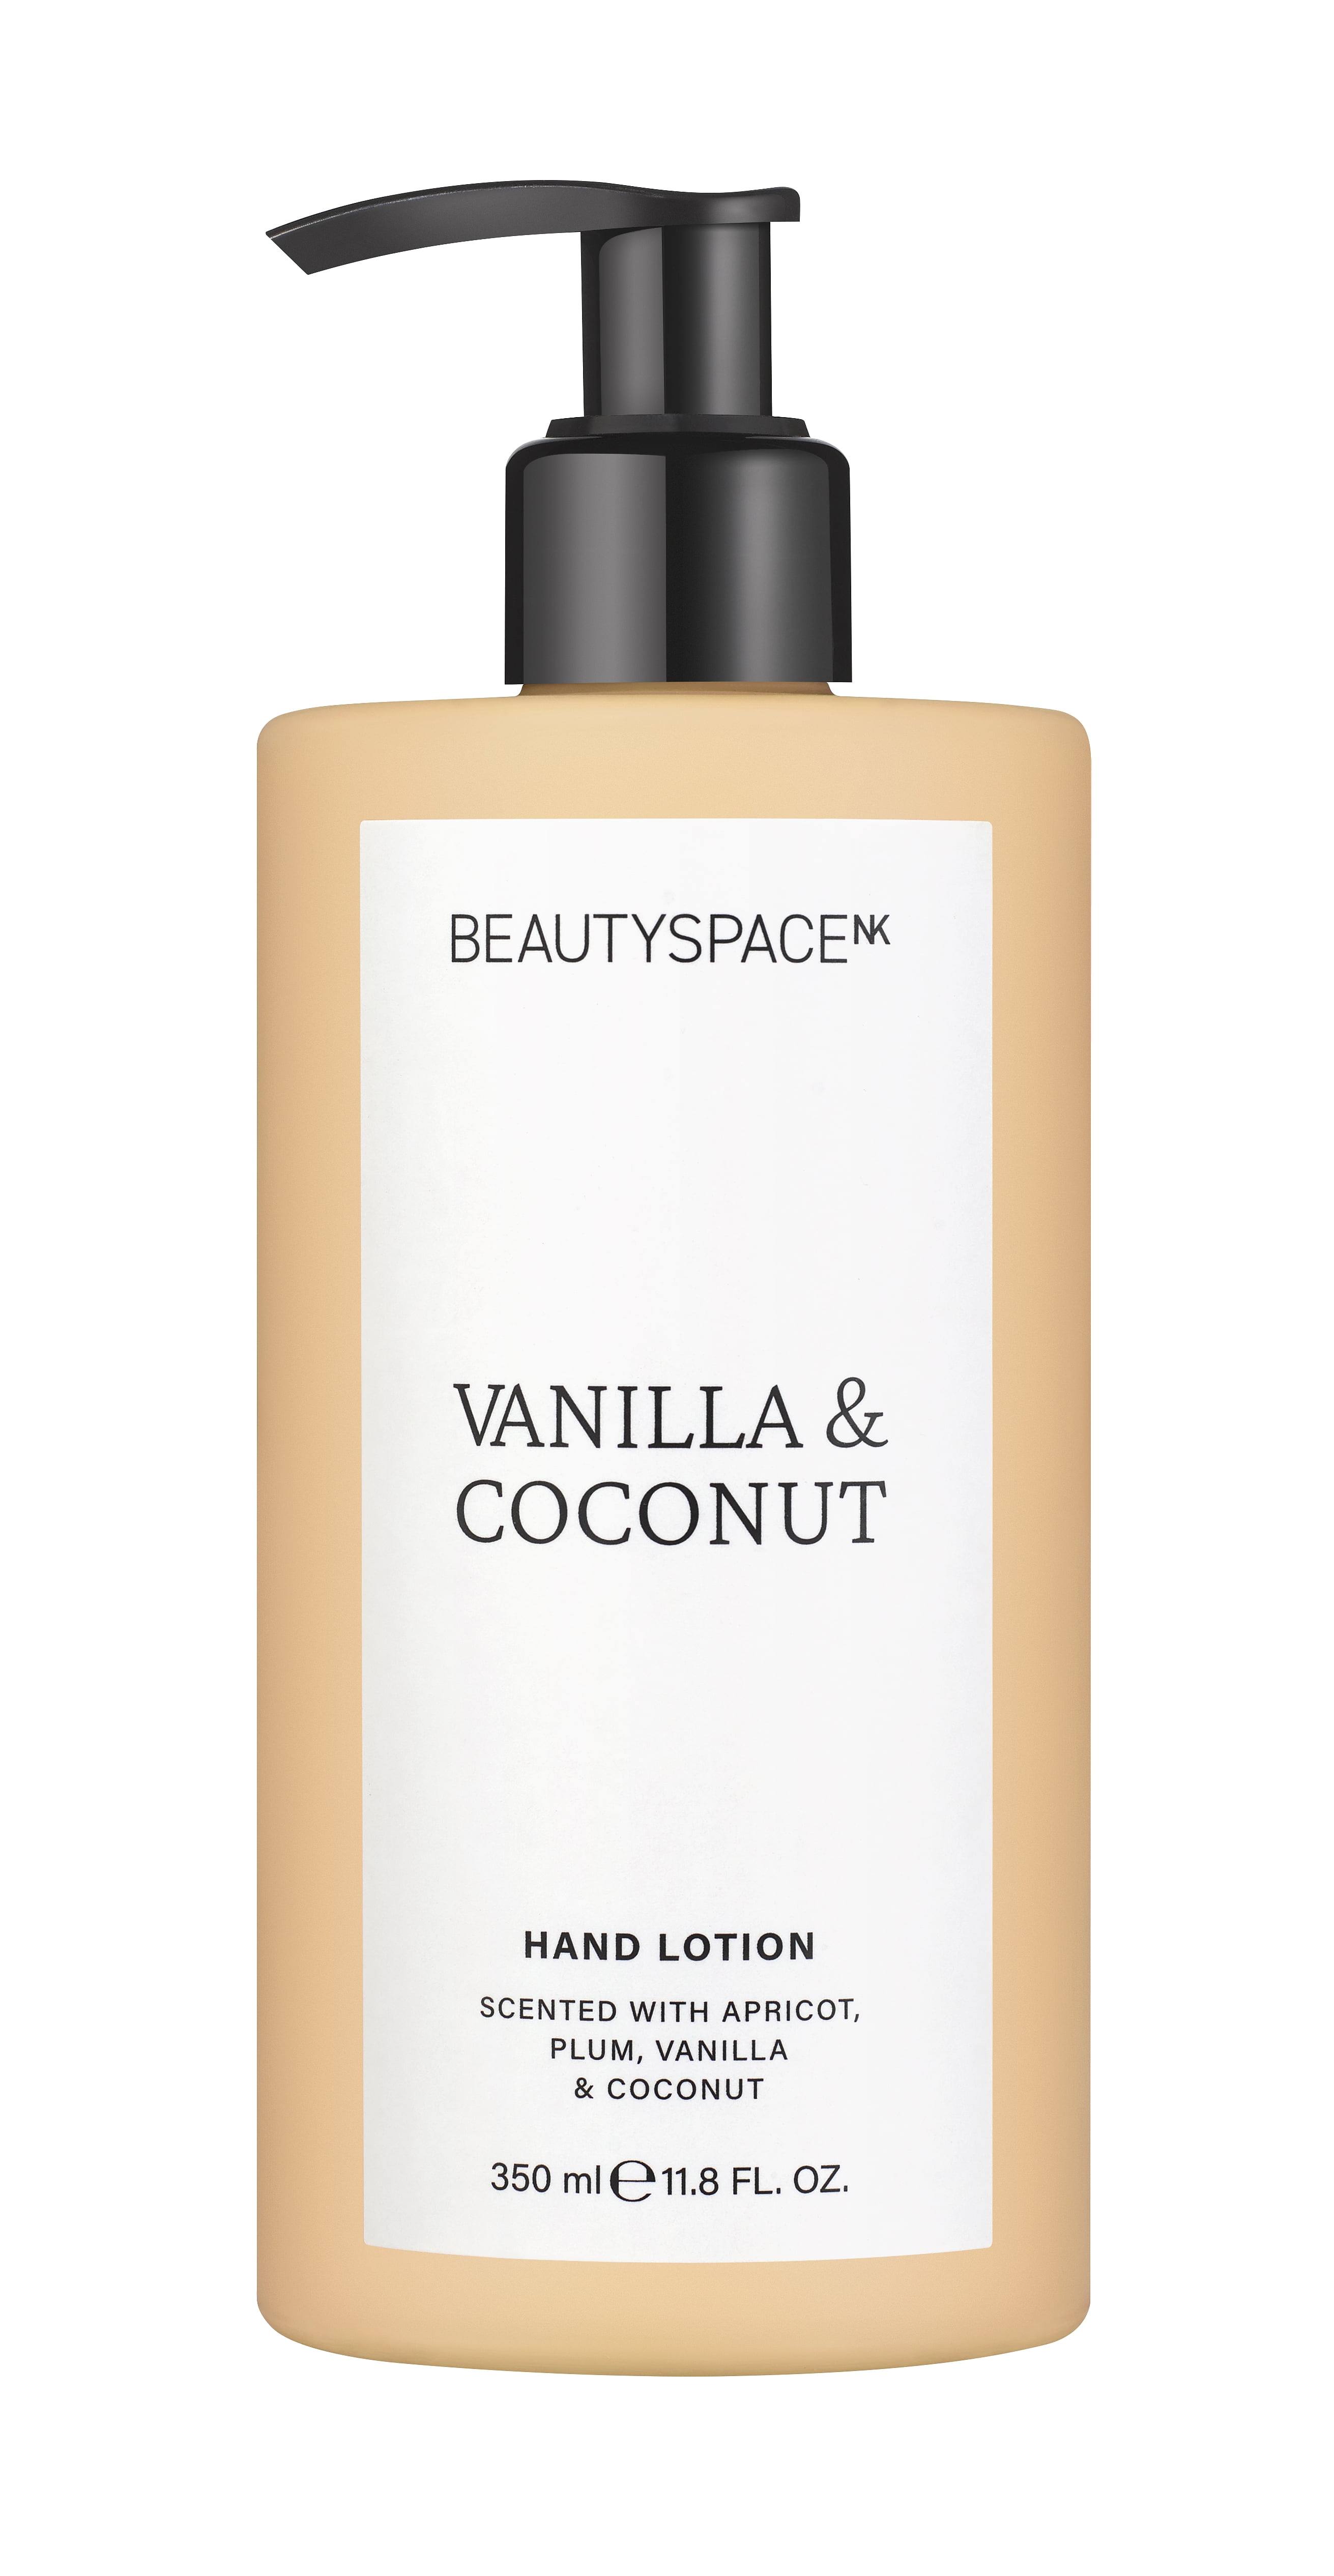 Beautyspacenk Vanilla & Coconut Hand Lotion - 11.83 fl oz